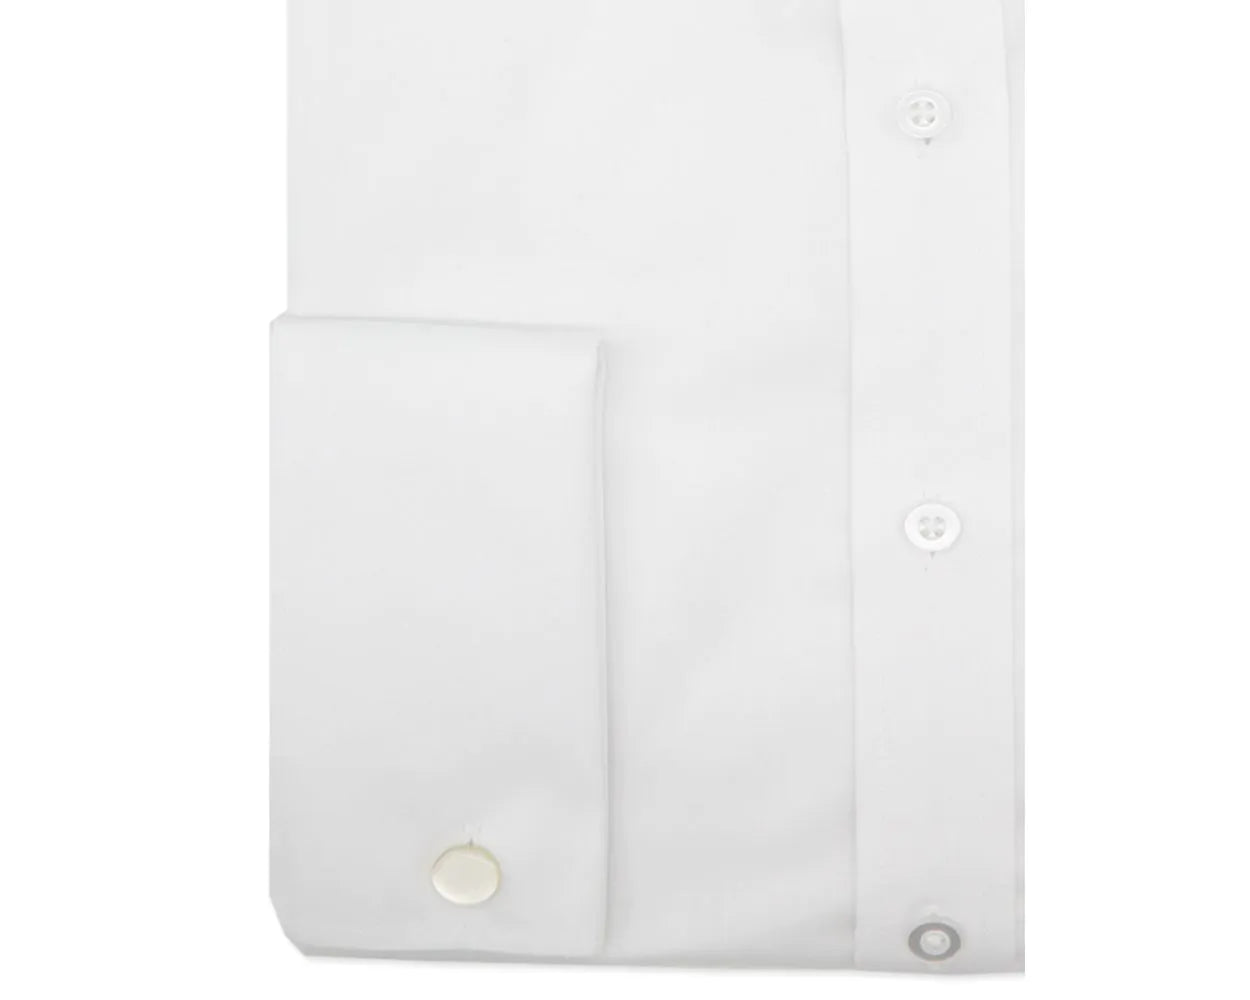 DOUBLE TWO Paradigm Shirt - Pure Cotton Non Iron Double Cuff – White